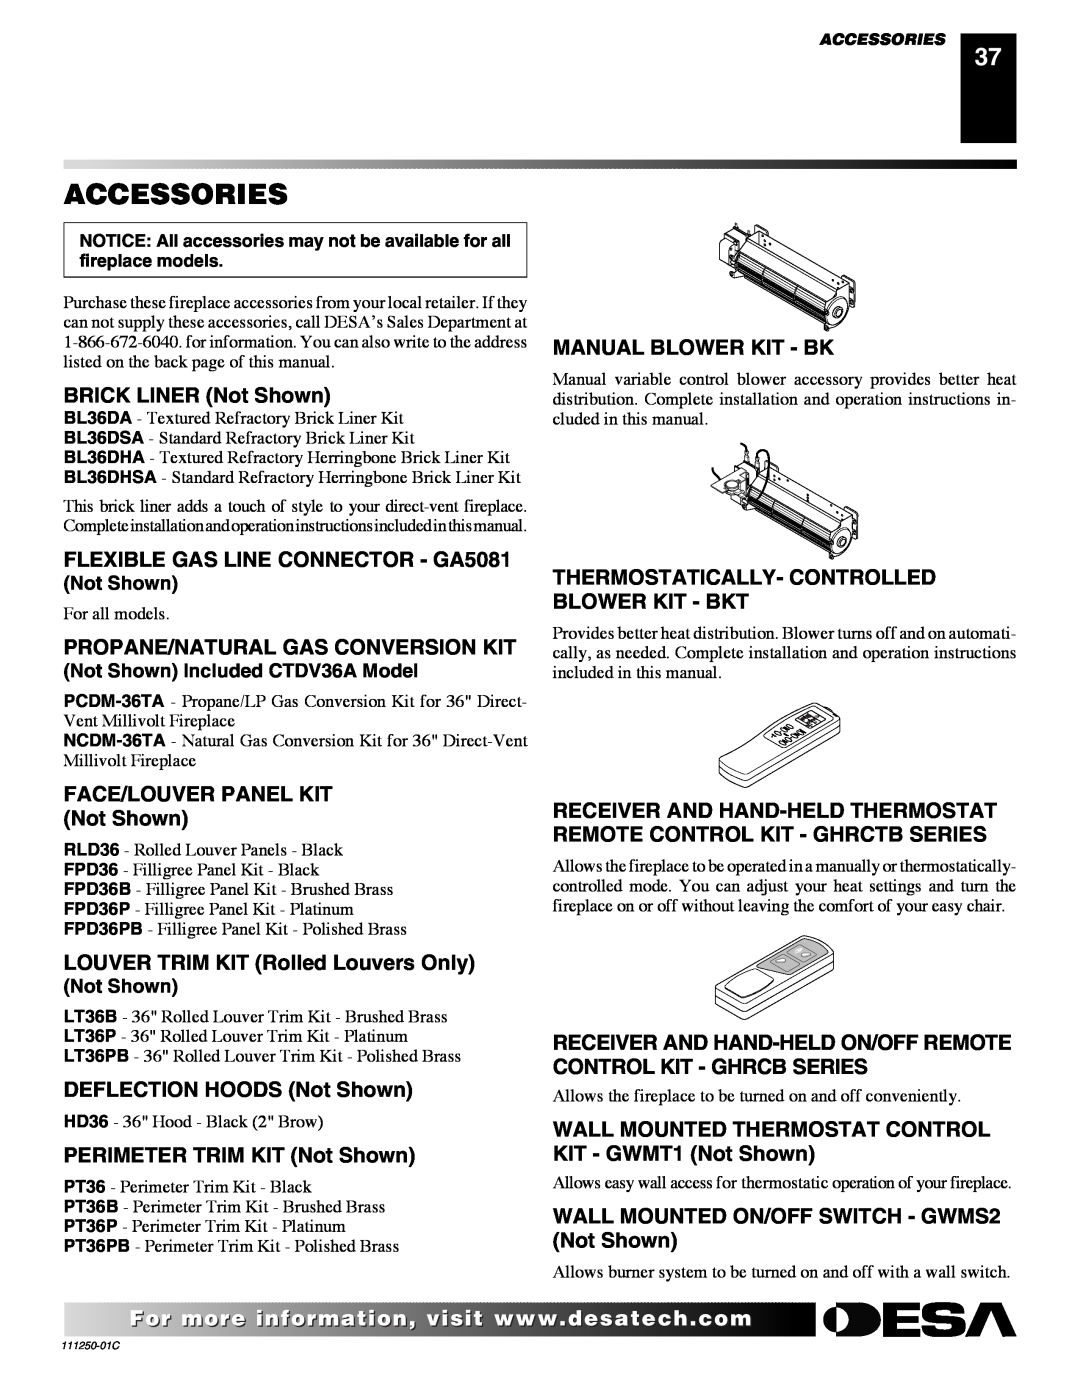 Desa (V)T36NA SERIES Accessories, BRICK LINER Not Shown, FLEXIBLE GAS LINE CONNECTOR - GA5081, Manual Blower Kit - Bk 